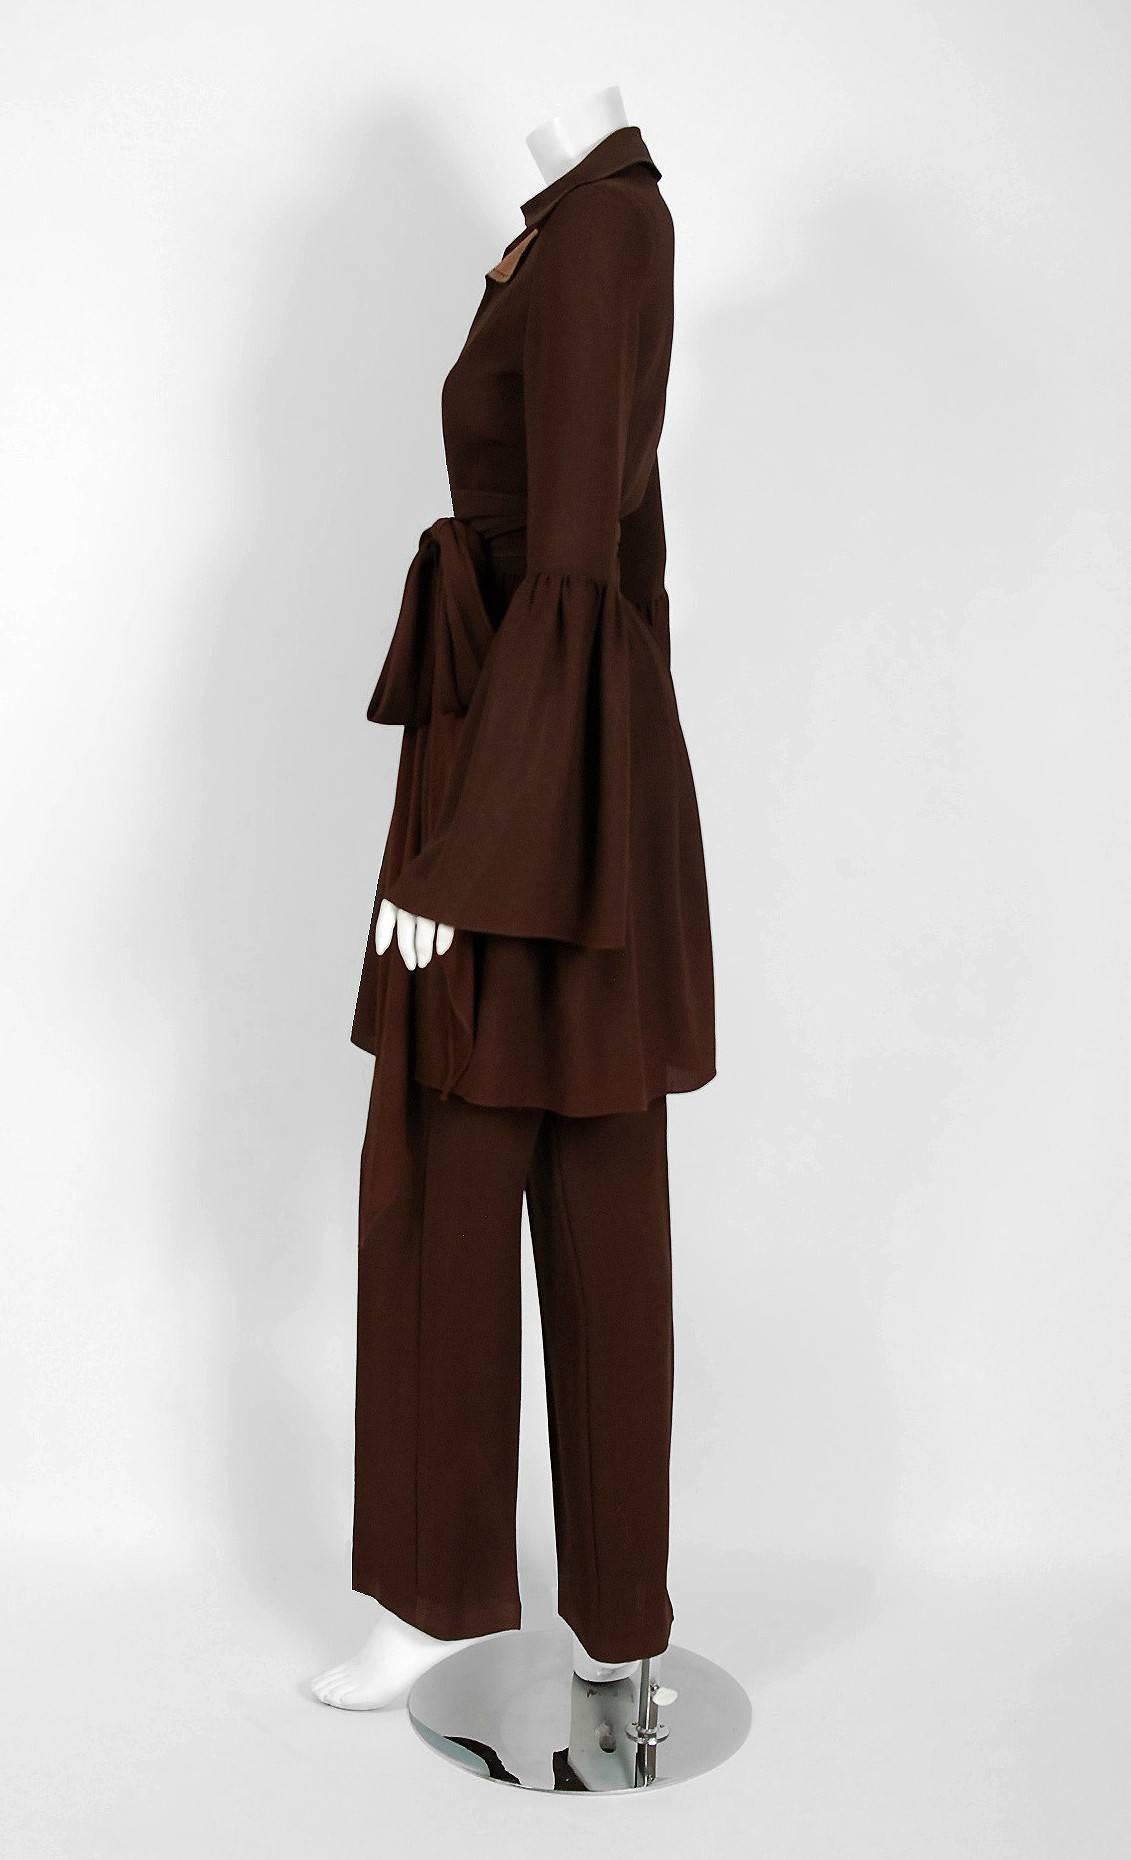 Women's 1971 Ossie Clark Brown Moss-Crepe & Satin Bell-Sleeve Plunge Dress Pant Suit